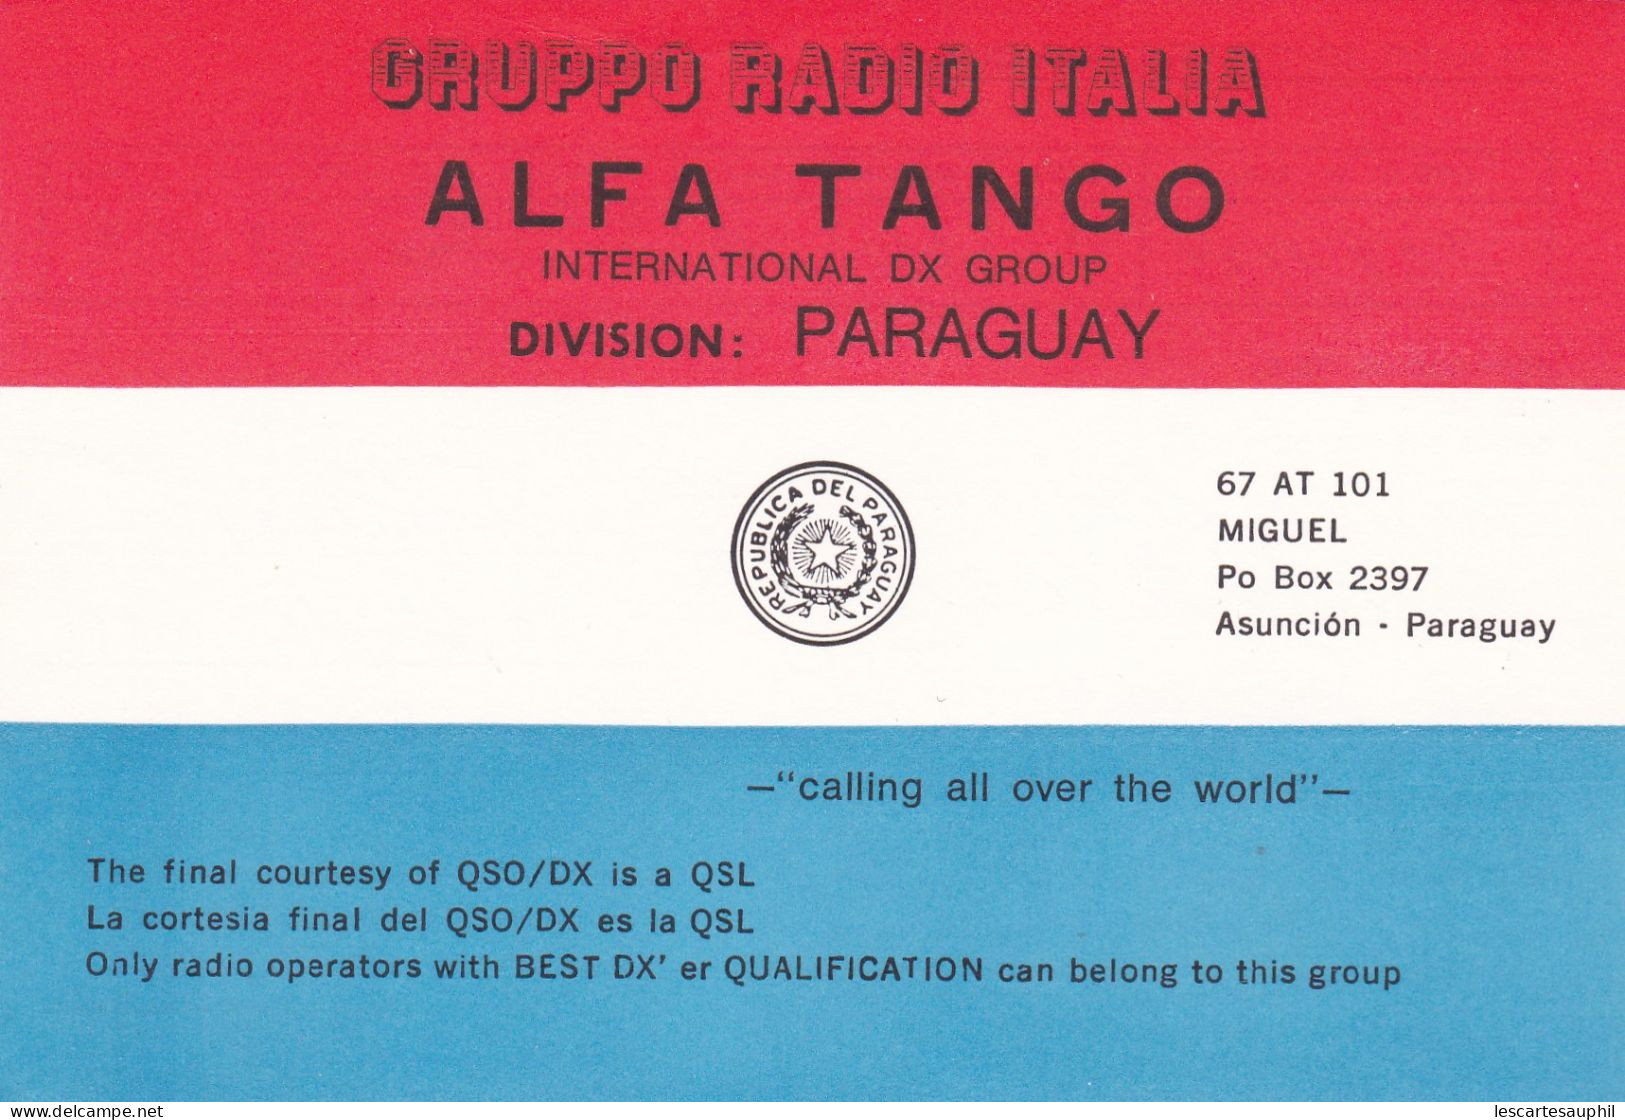 Qsl Alfa Tango Division Paraguay 1991 Op Miguel 67 AT 101 - CB